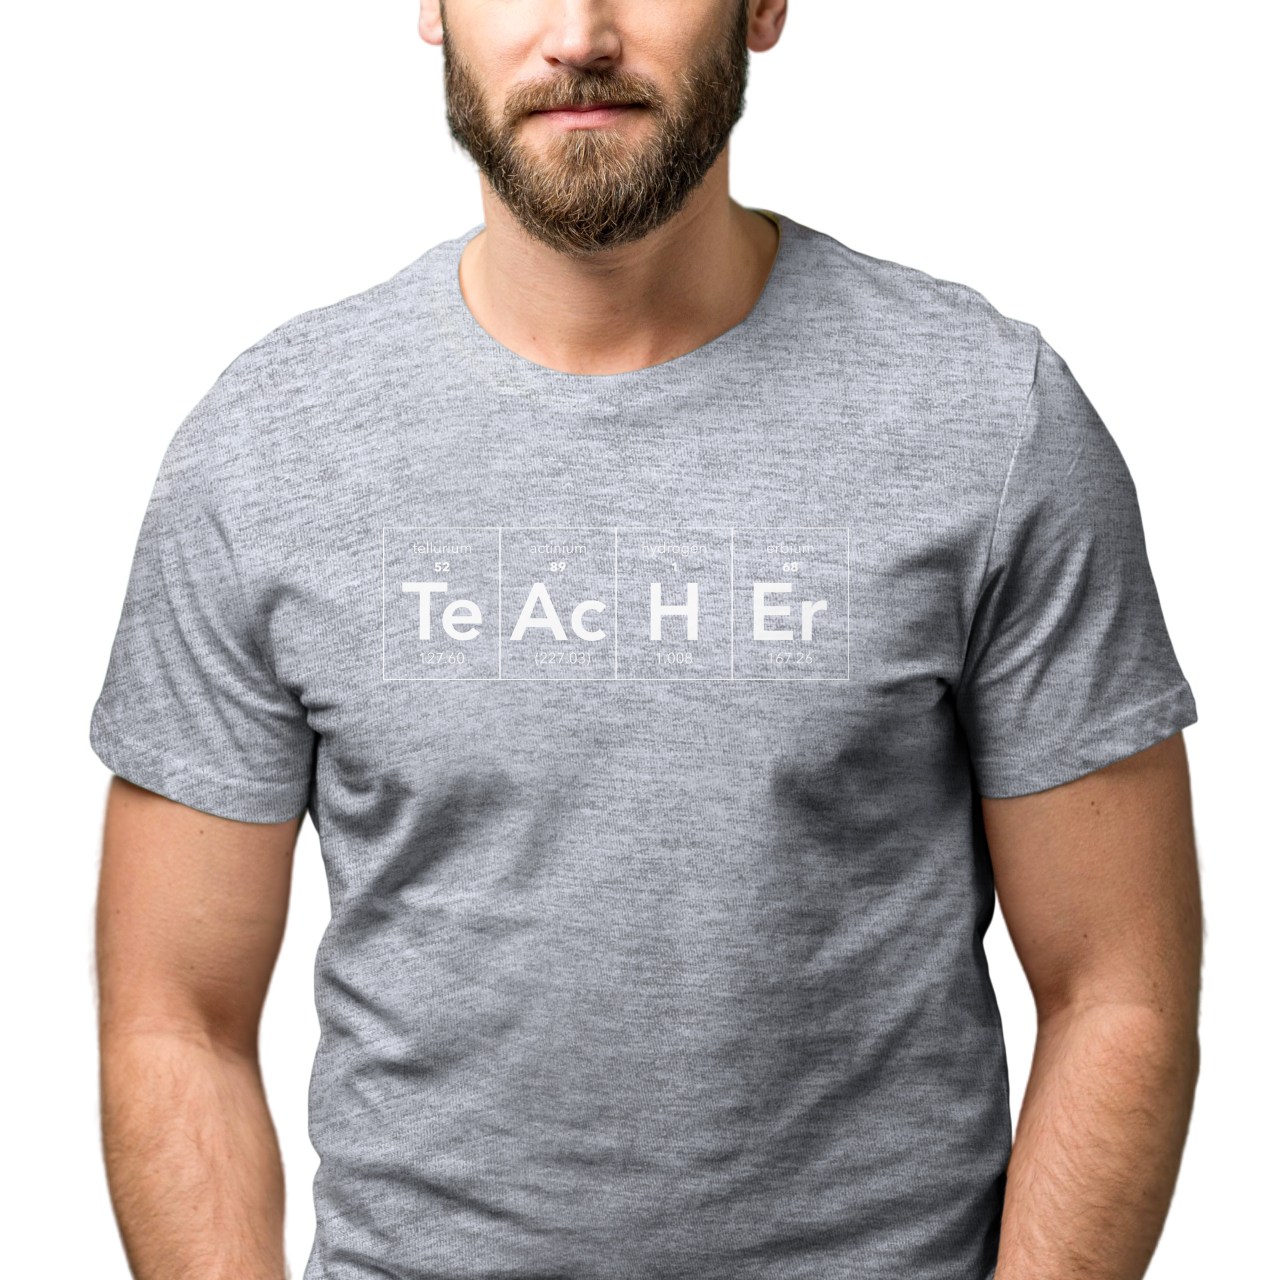 Pánské tričko s potiskem “Te Ac H Er”